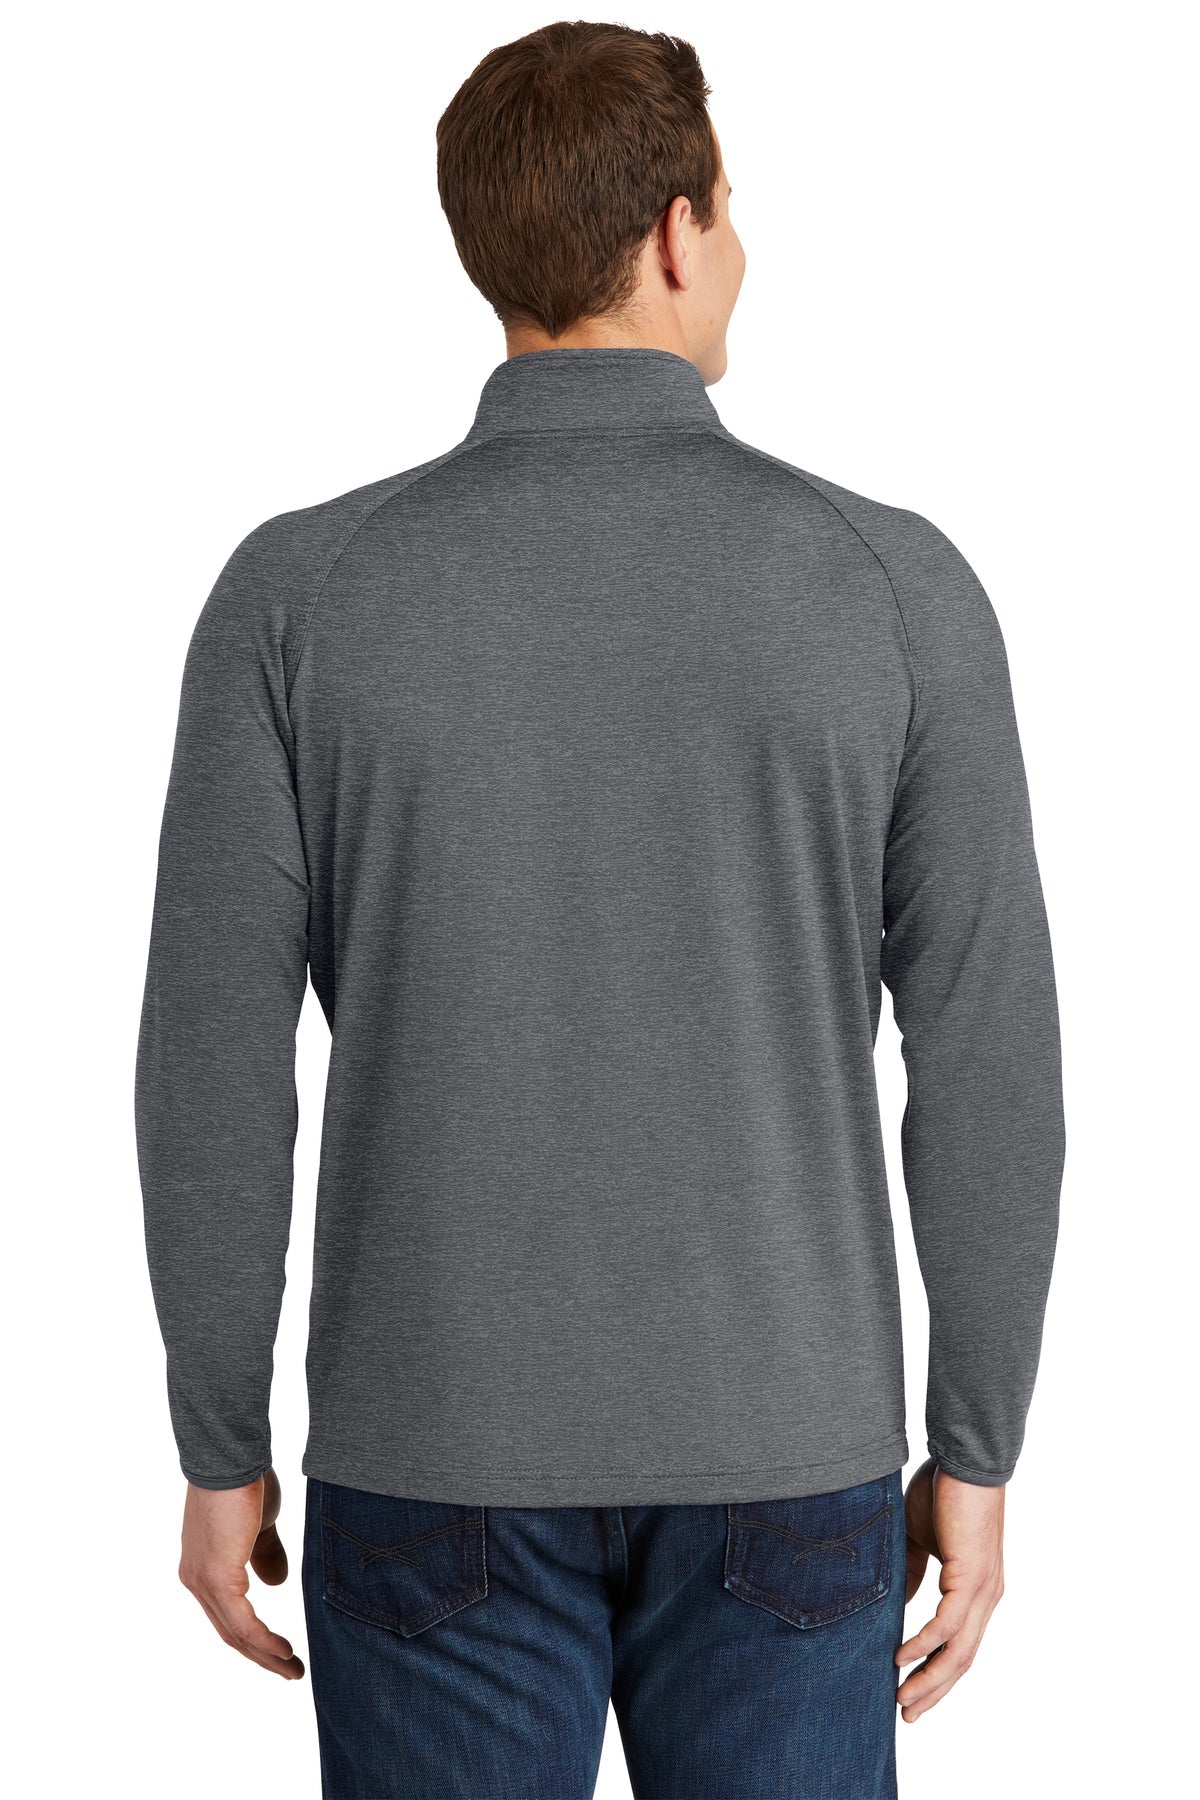 sport-tek_st850 _charcoal grey heather_company_logo_sweatshirts